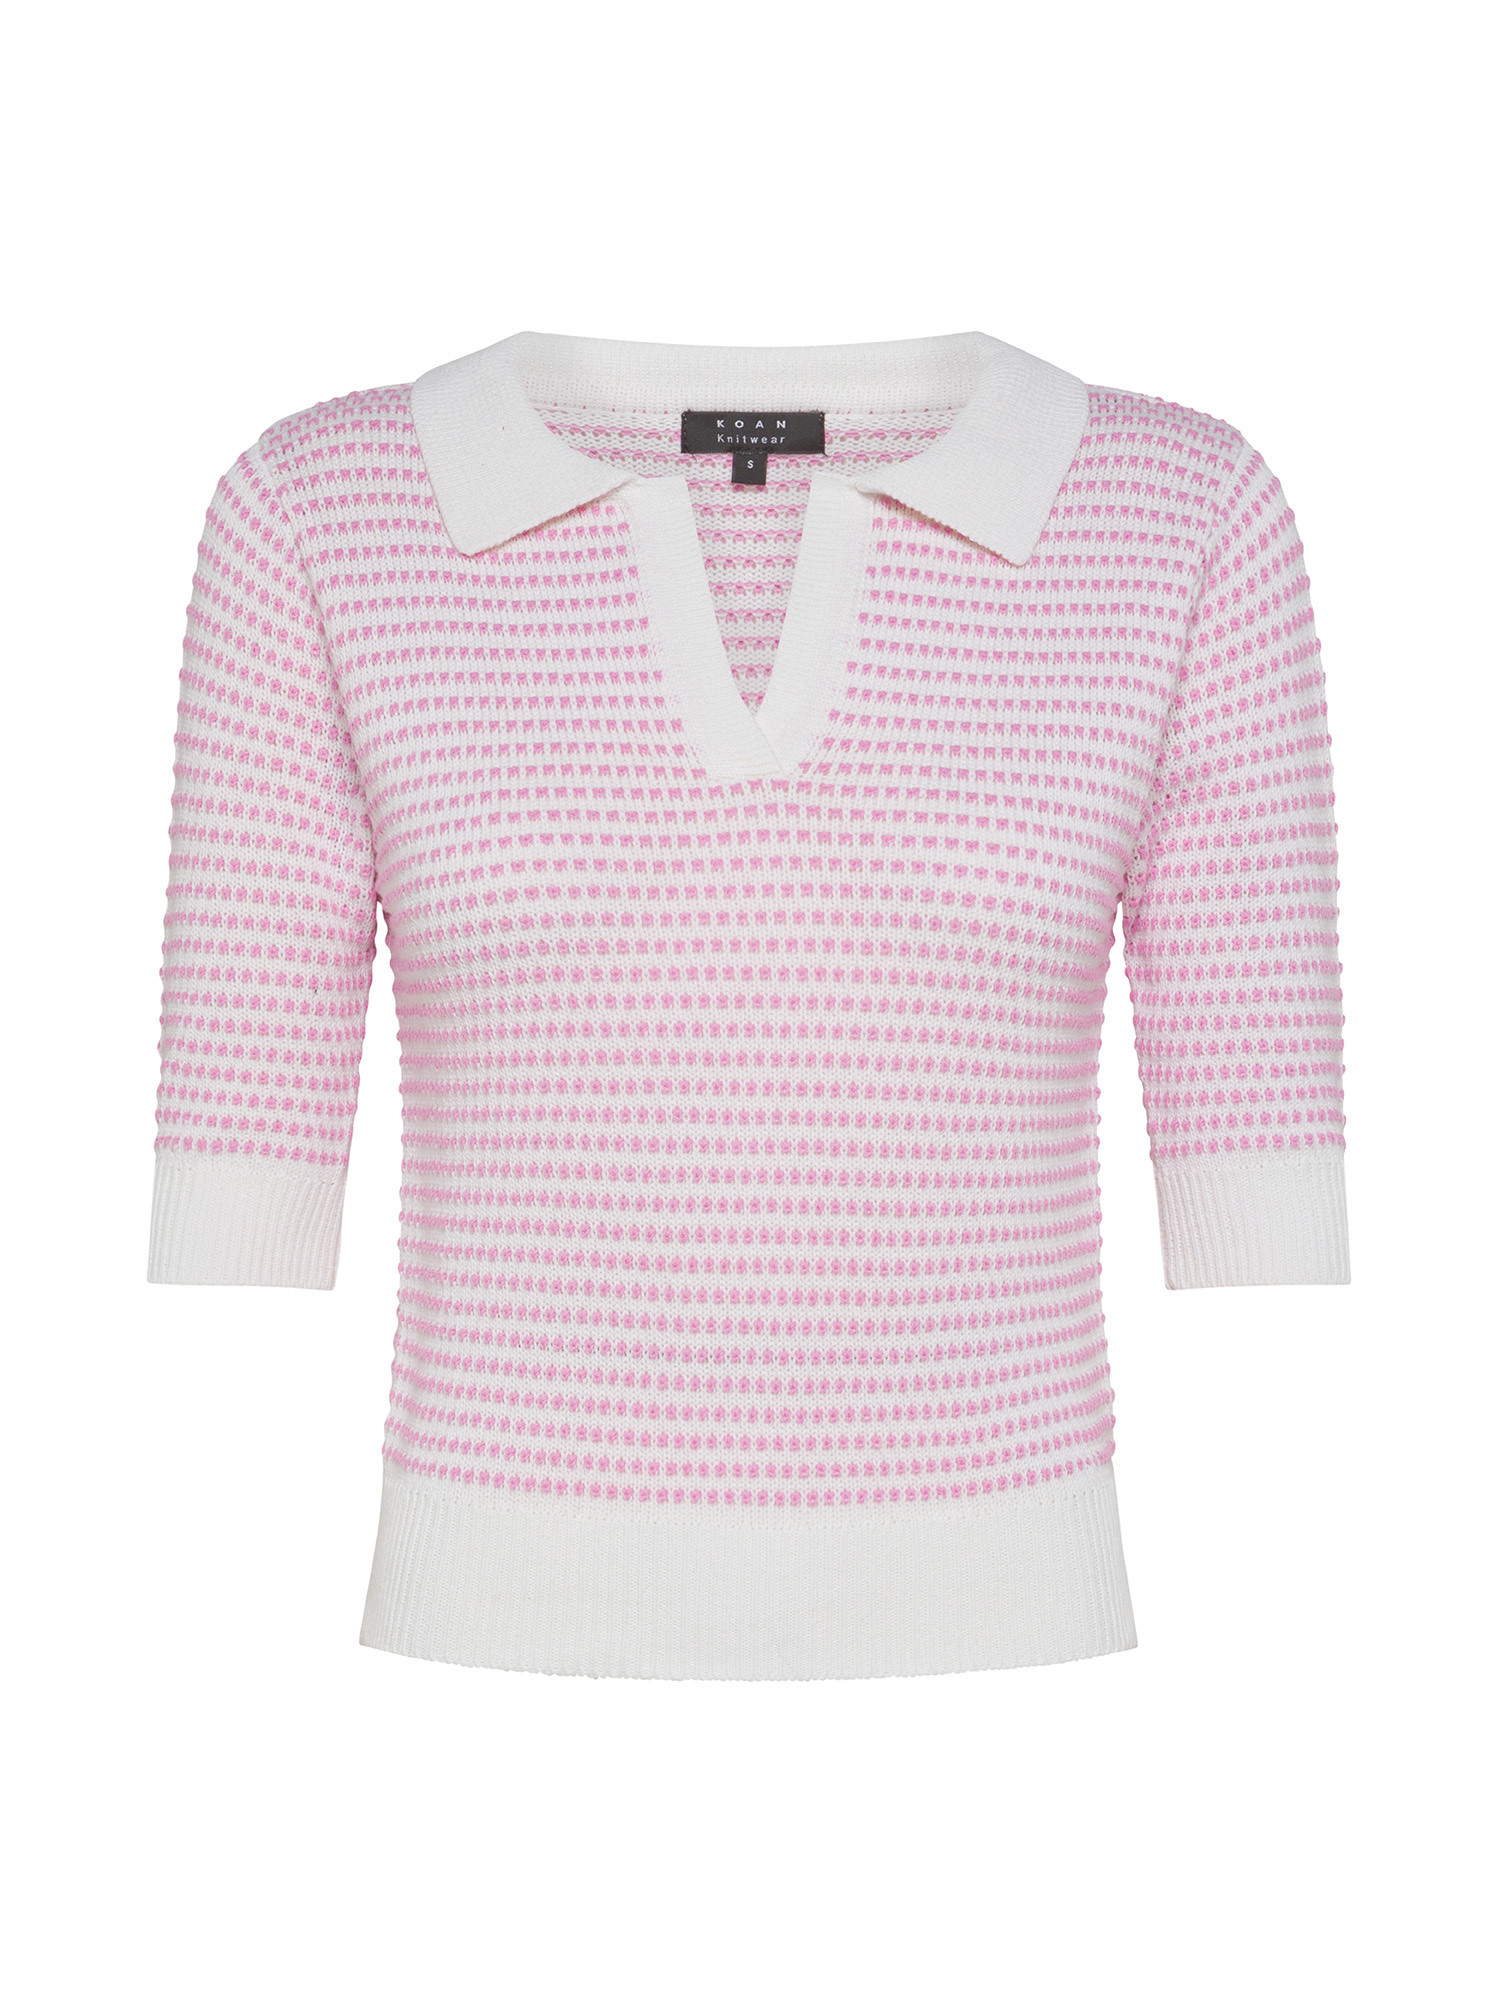 Koan - Short two-tone sweater, Pink, large image number 0